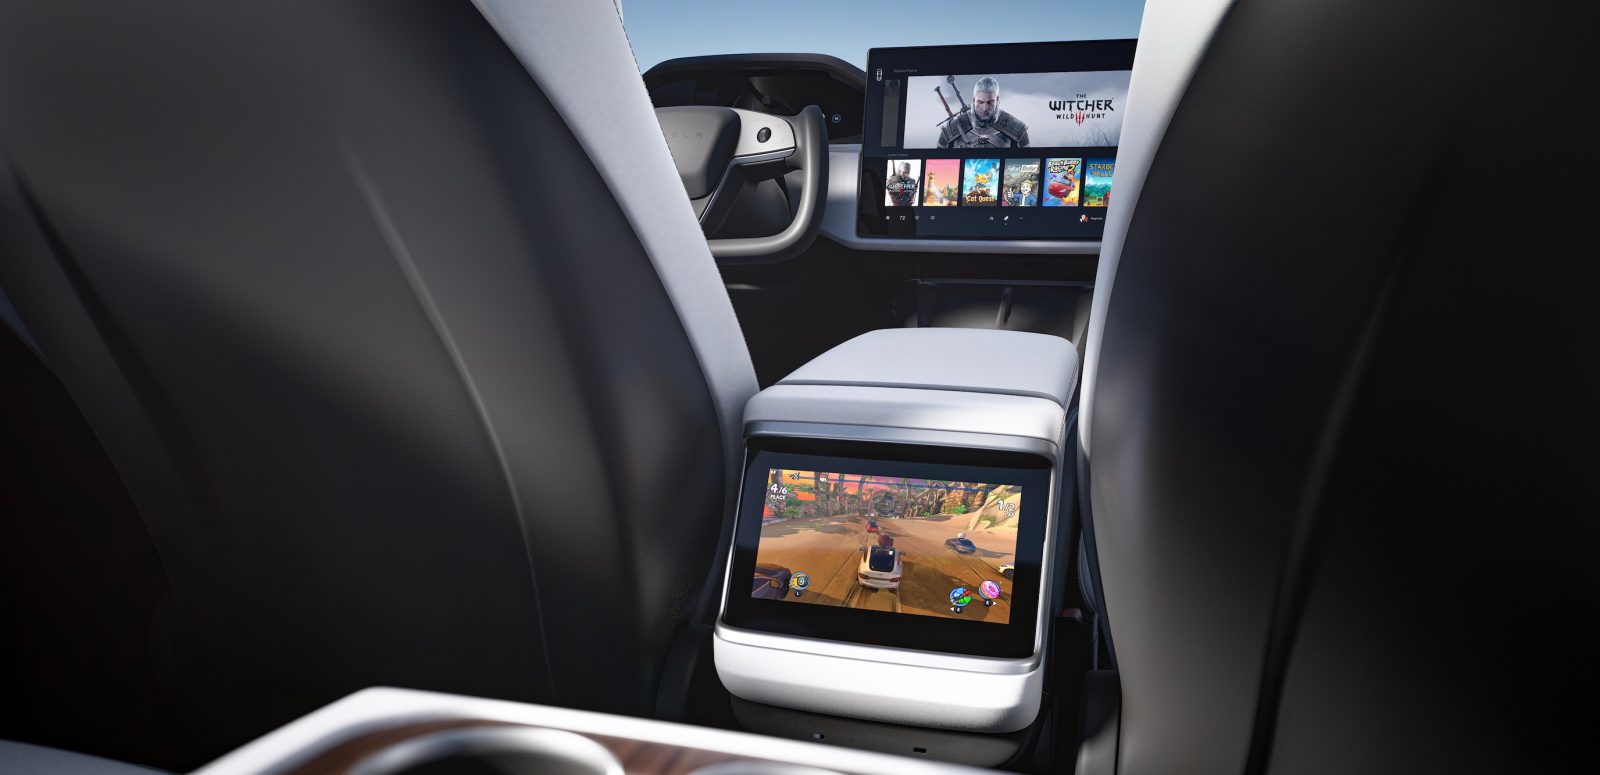 Tesla video games model S backseat